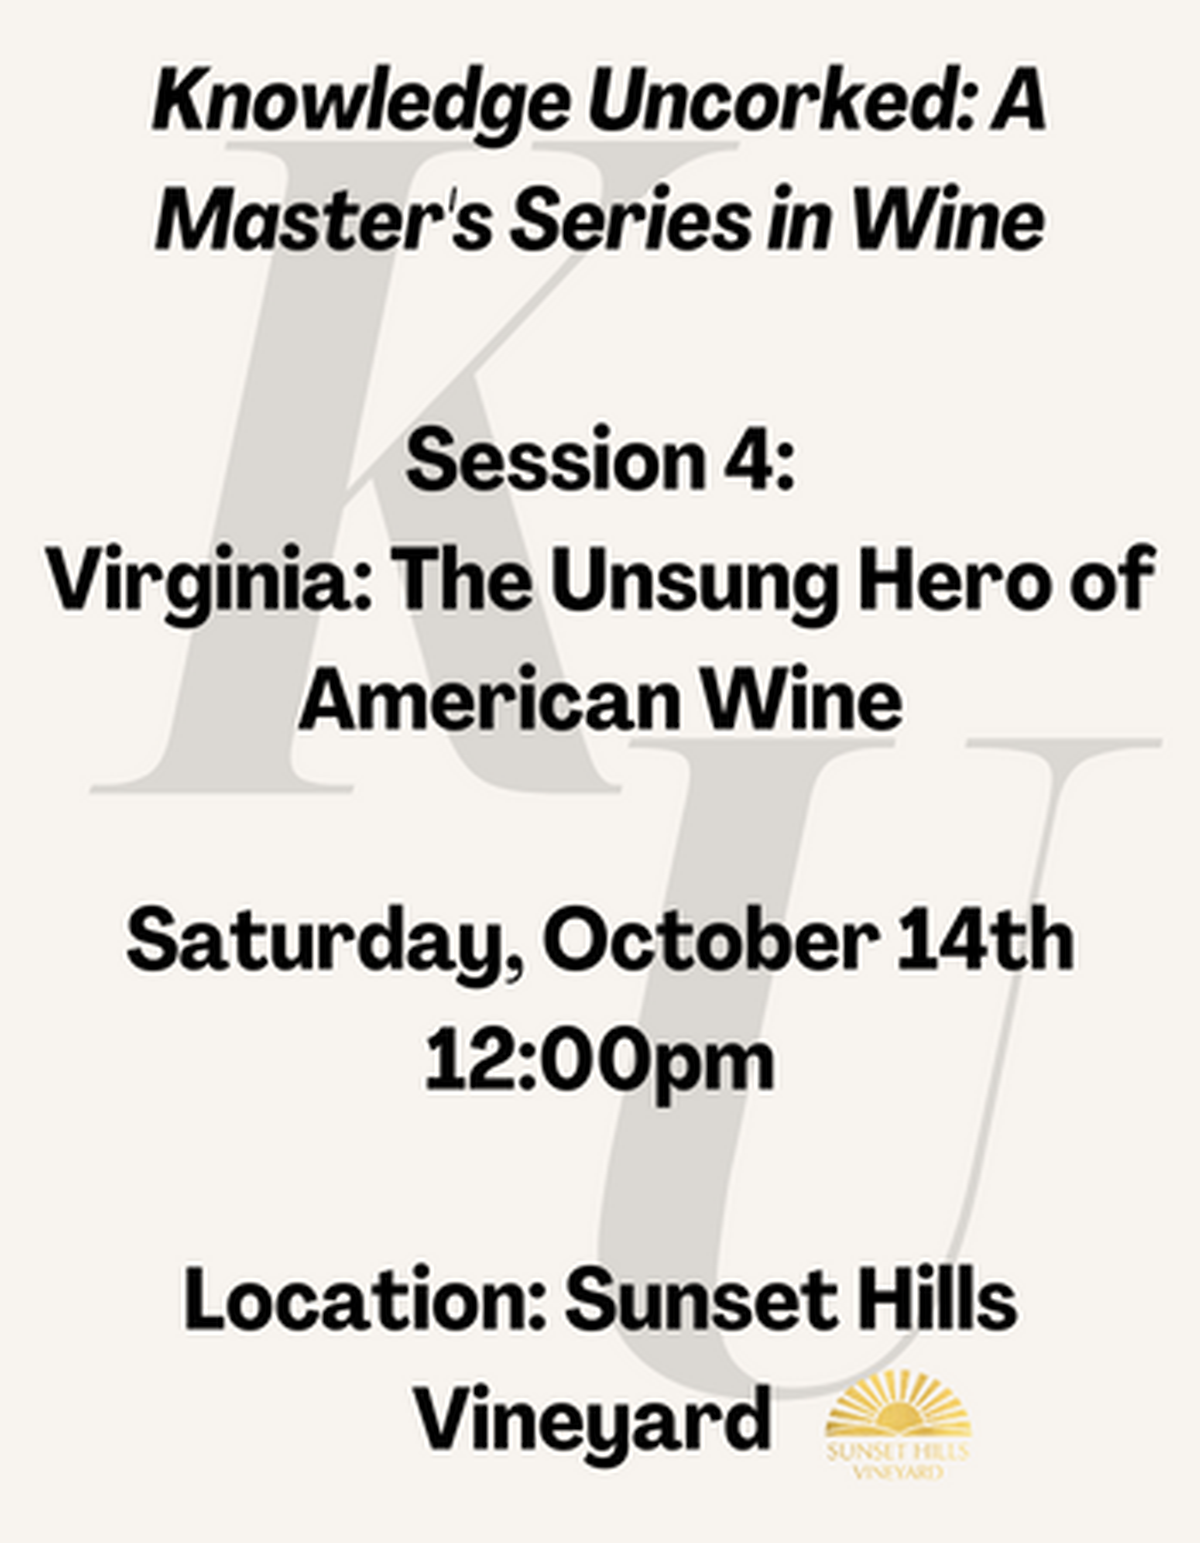 Virginia: The Unsung Hero of American Wine (12:00pm)